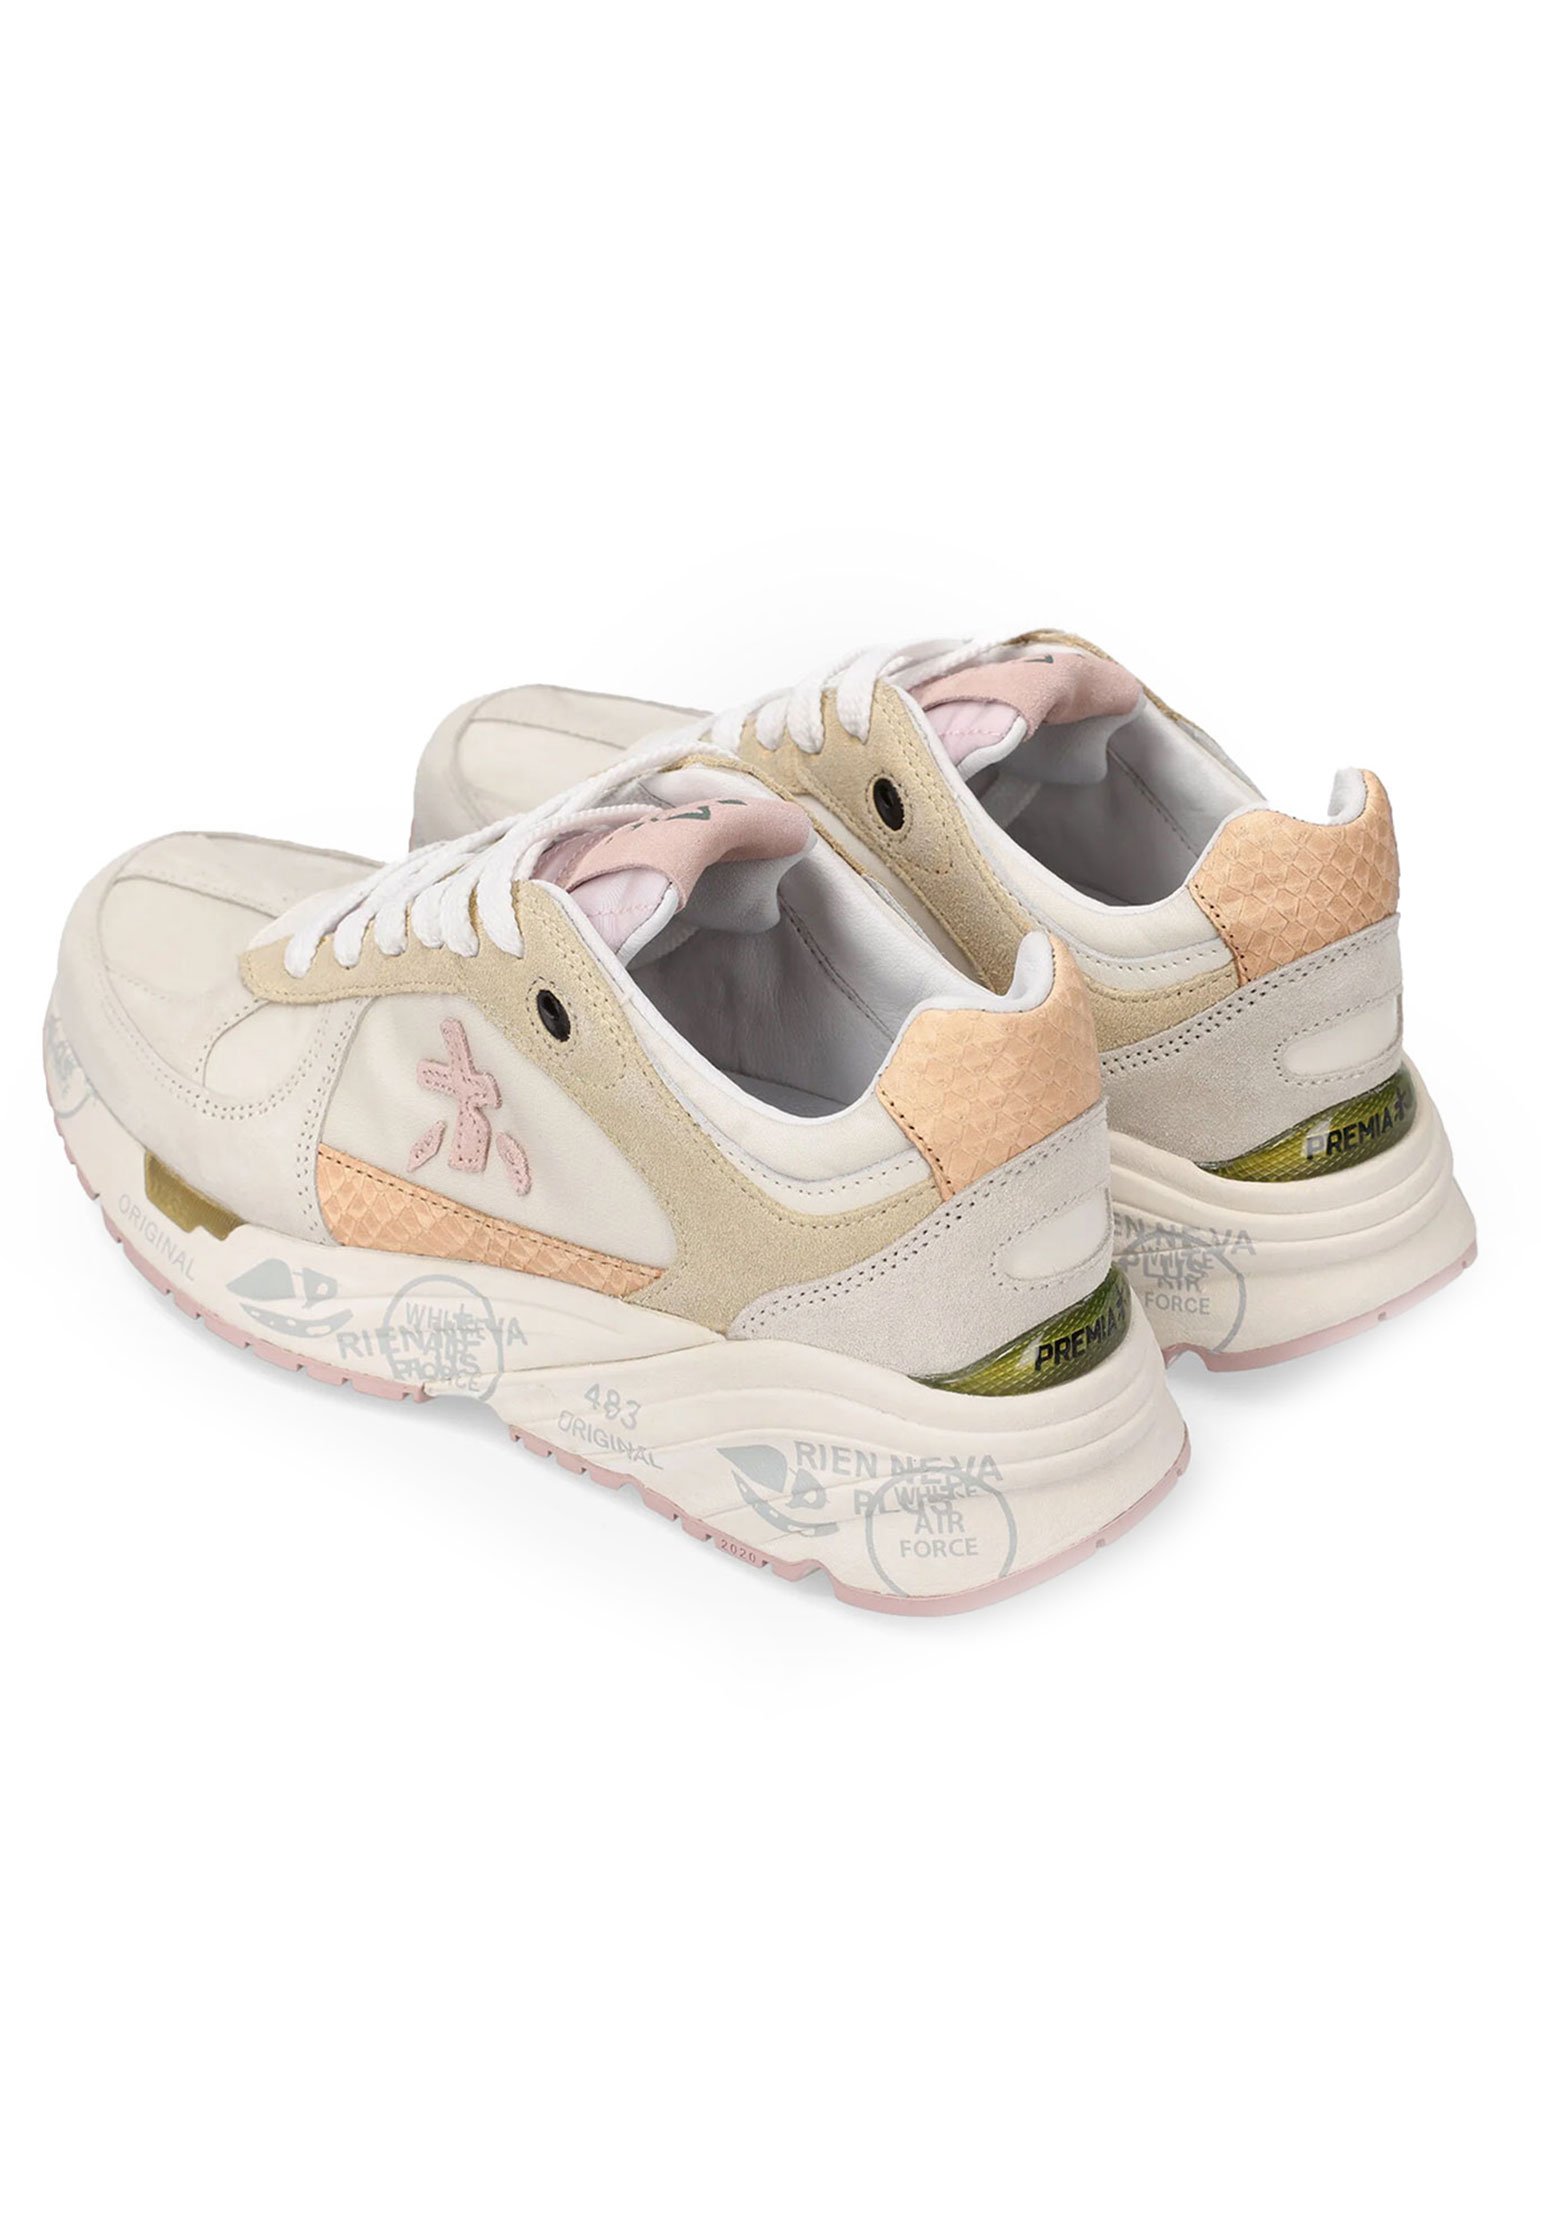 Sneakers PREMIATA Color: beige (Code: 4174) in online store Allure